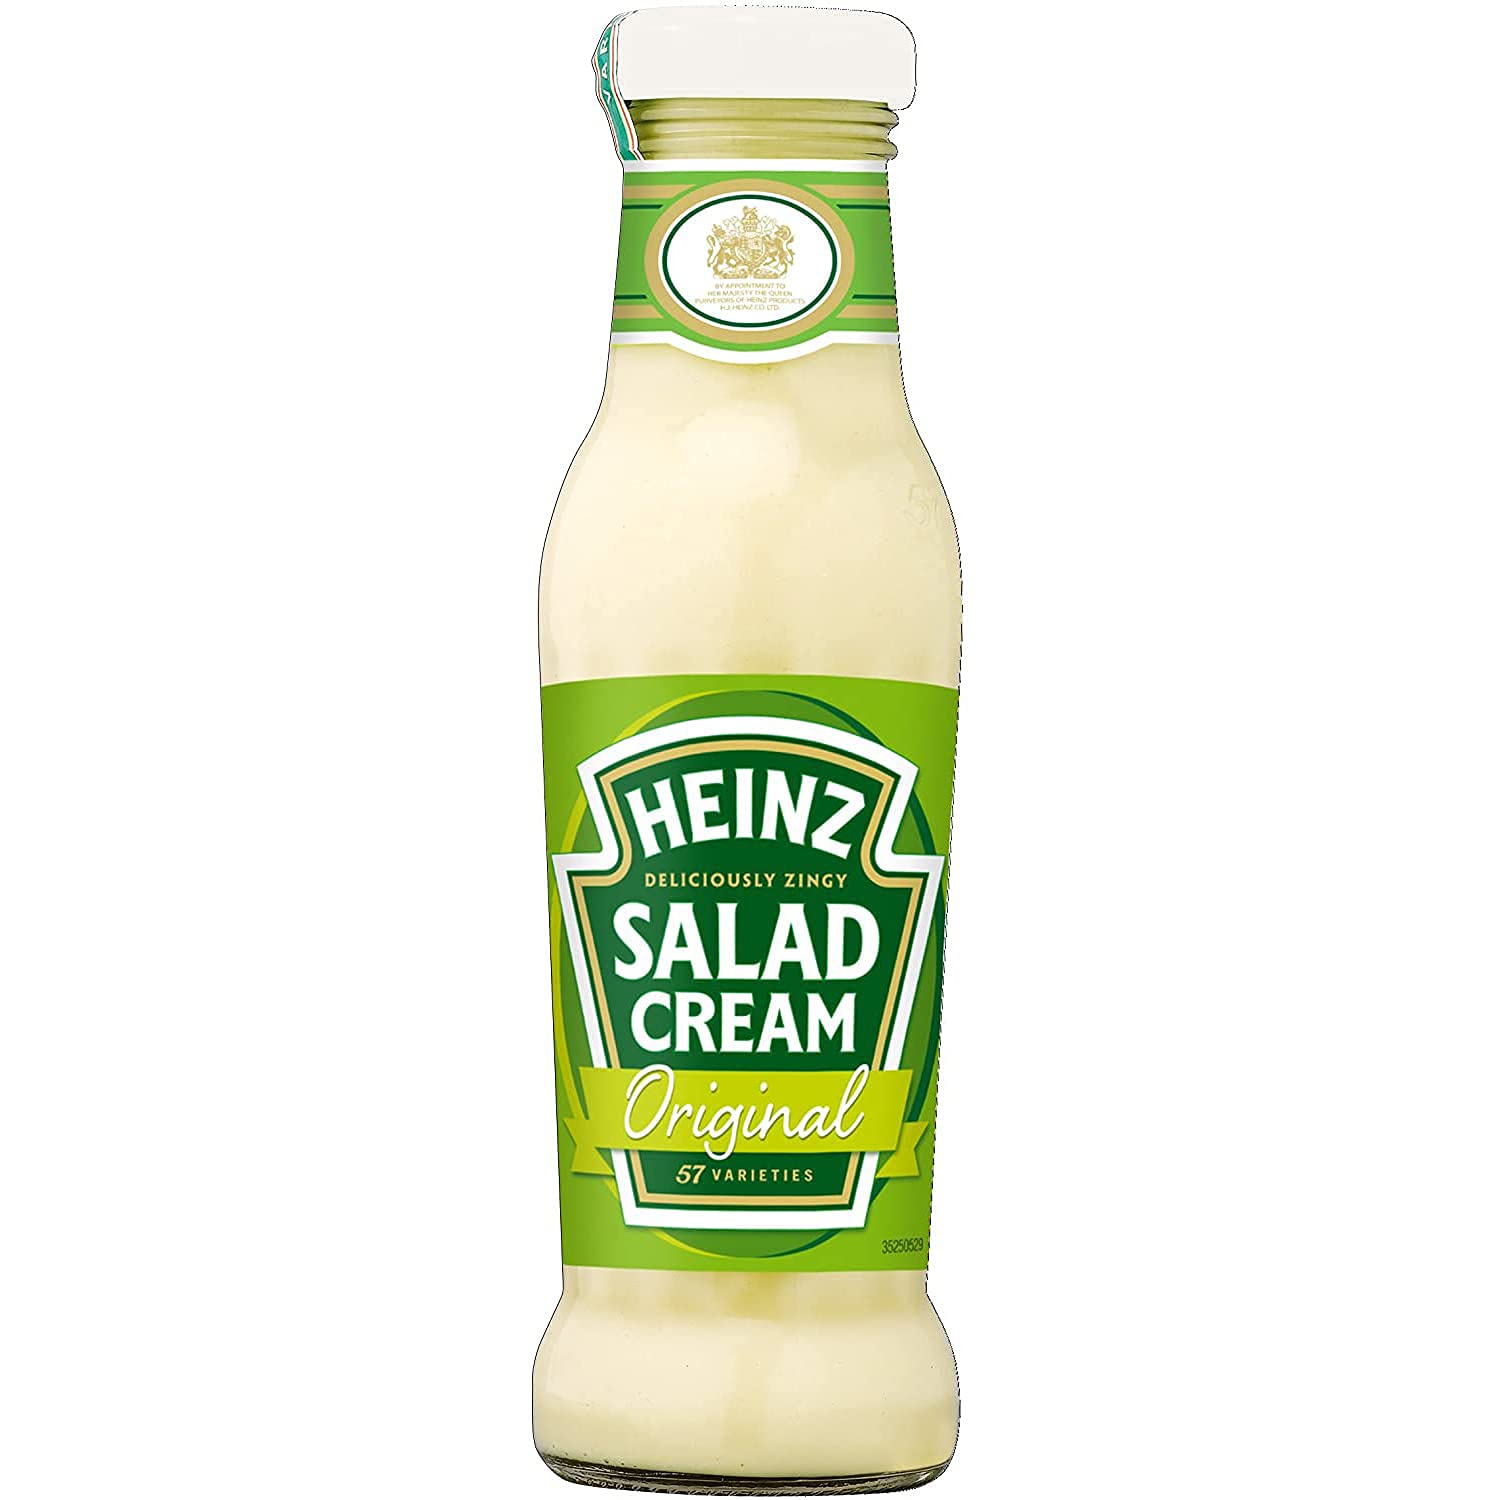 Heinz Salad Cream Image